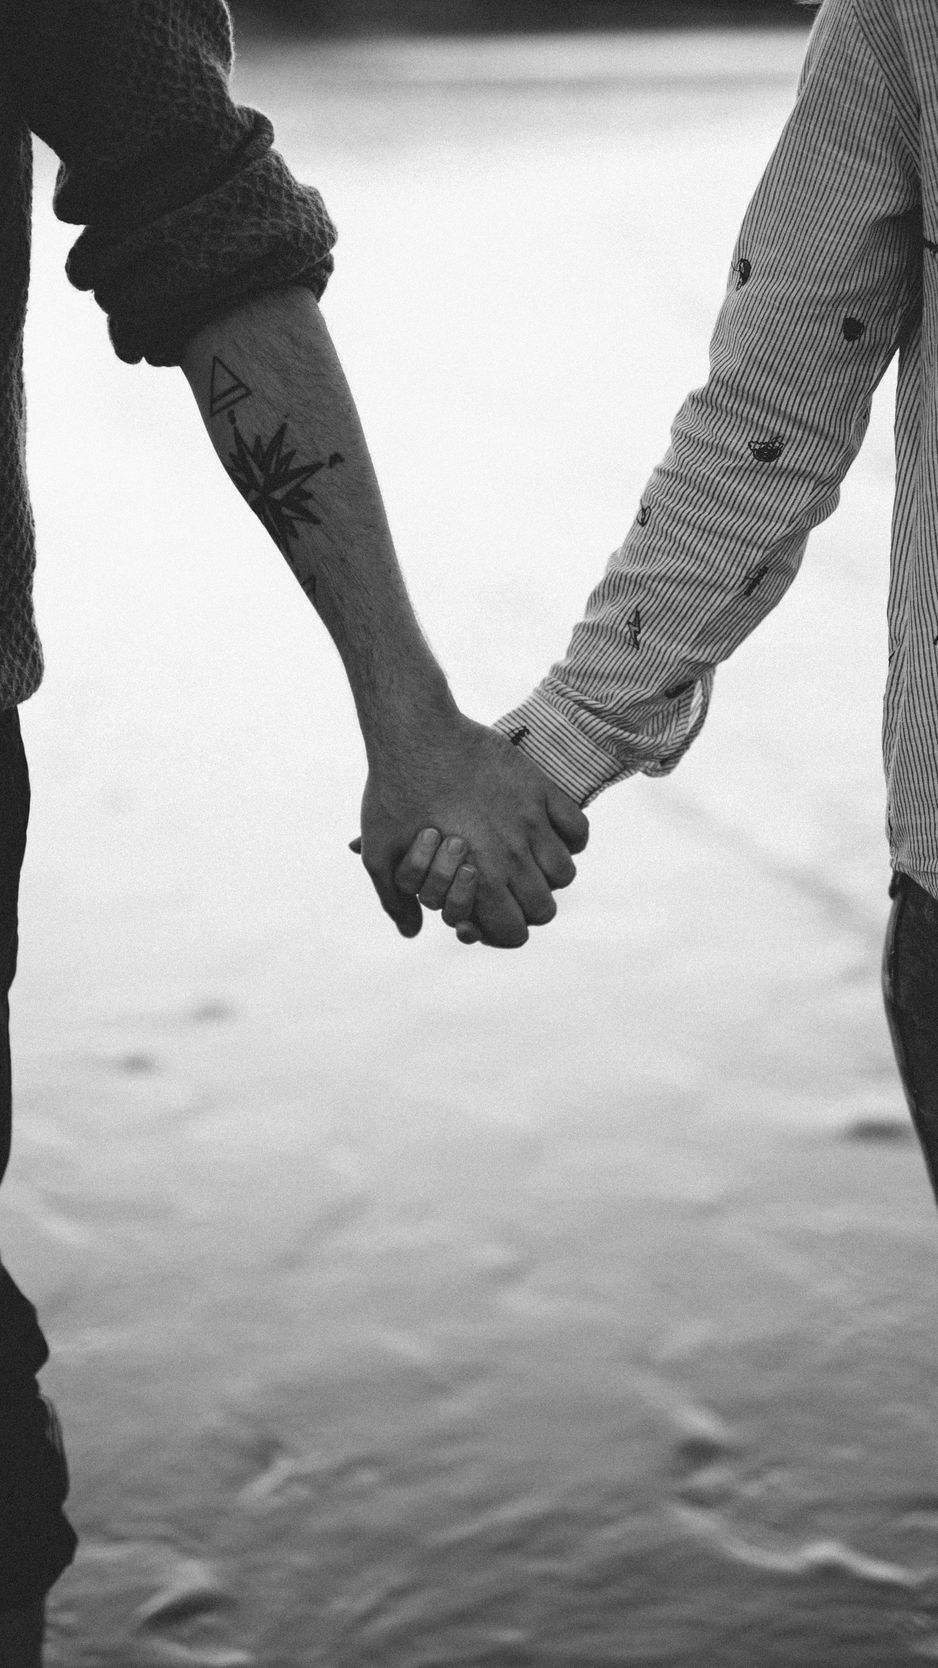 holding hands love wallpaper